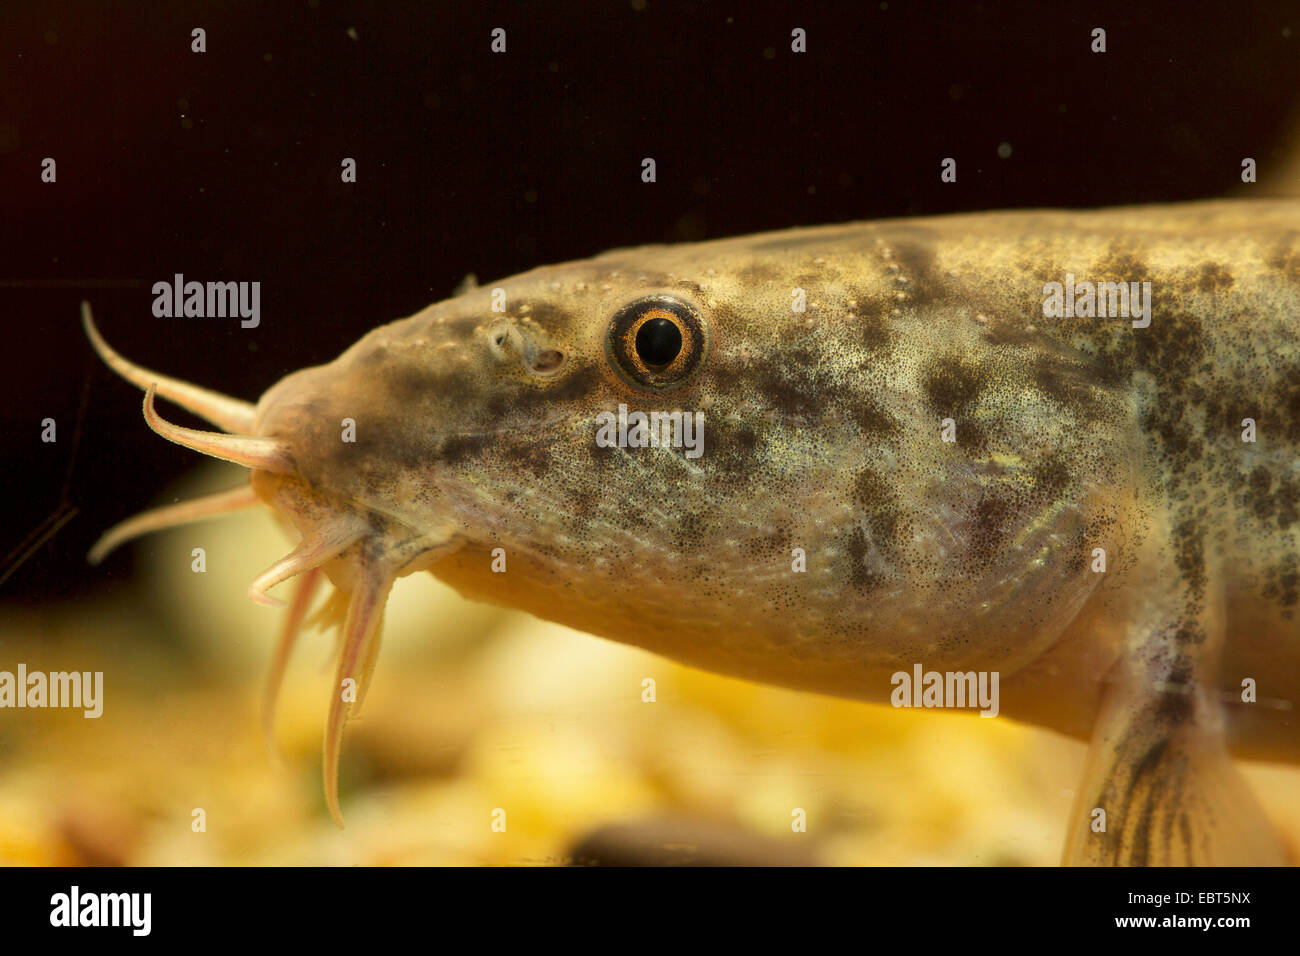 pond loach, dojo loach (Misgurnus anguillicaudatus), female, portrait Stock Photo